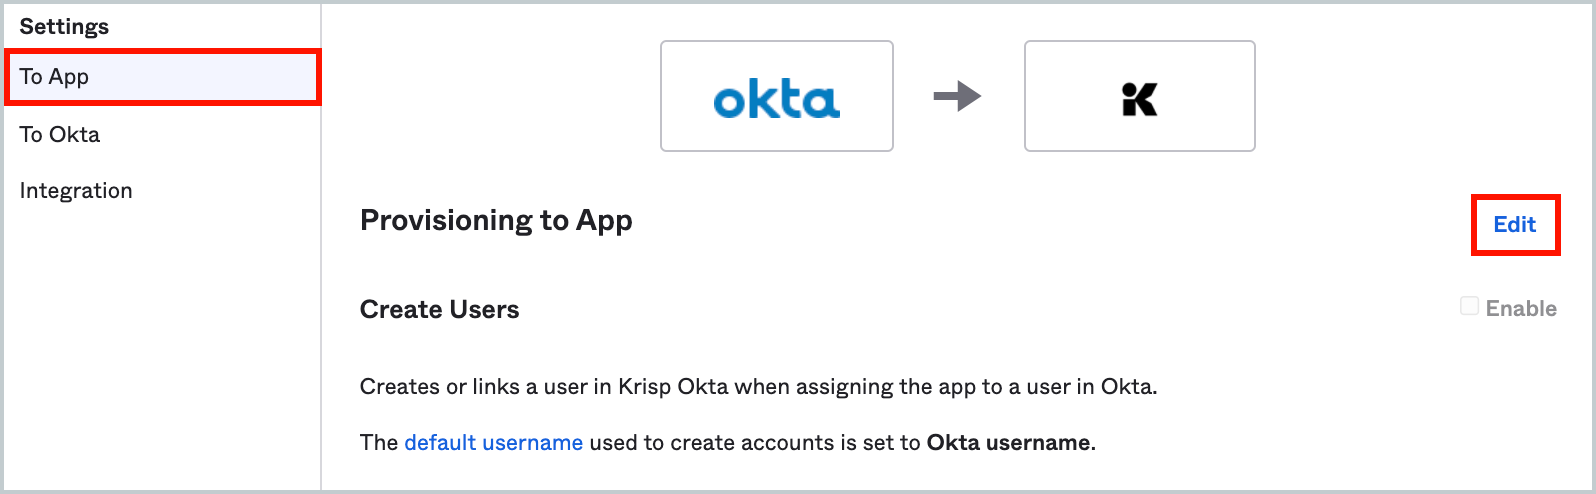 okta_to_app_edit.png